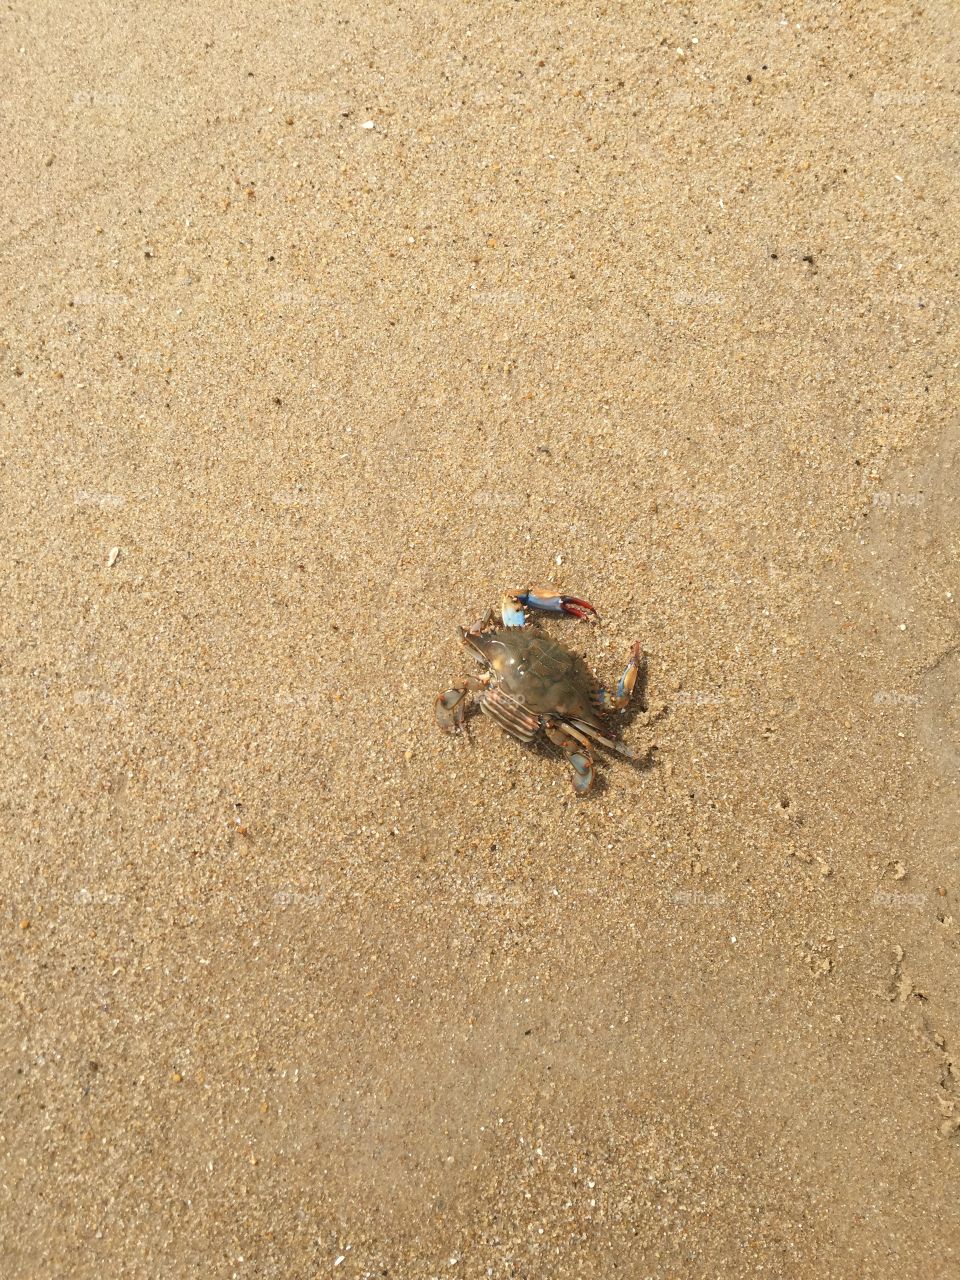 Maryland blue crab.